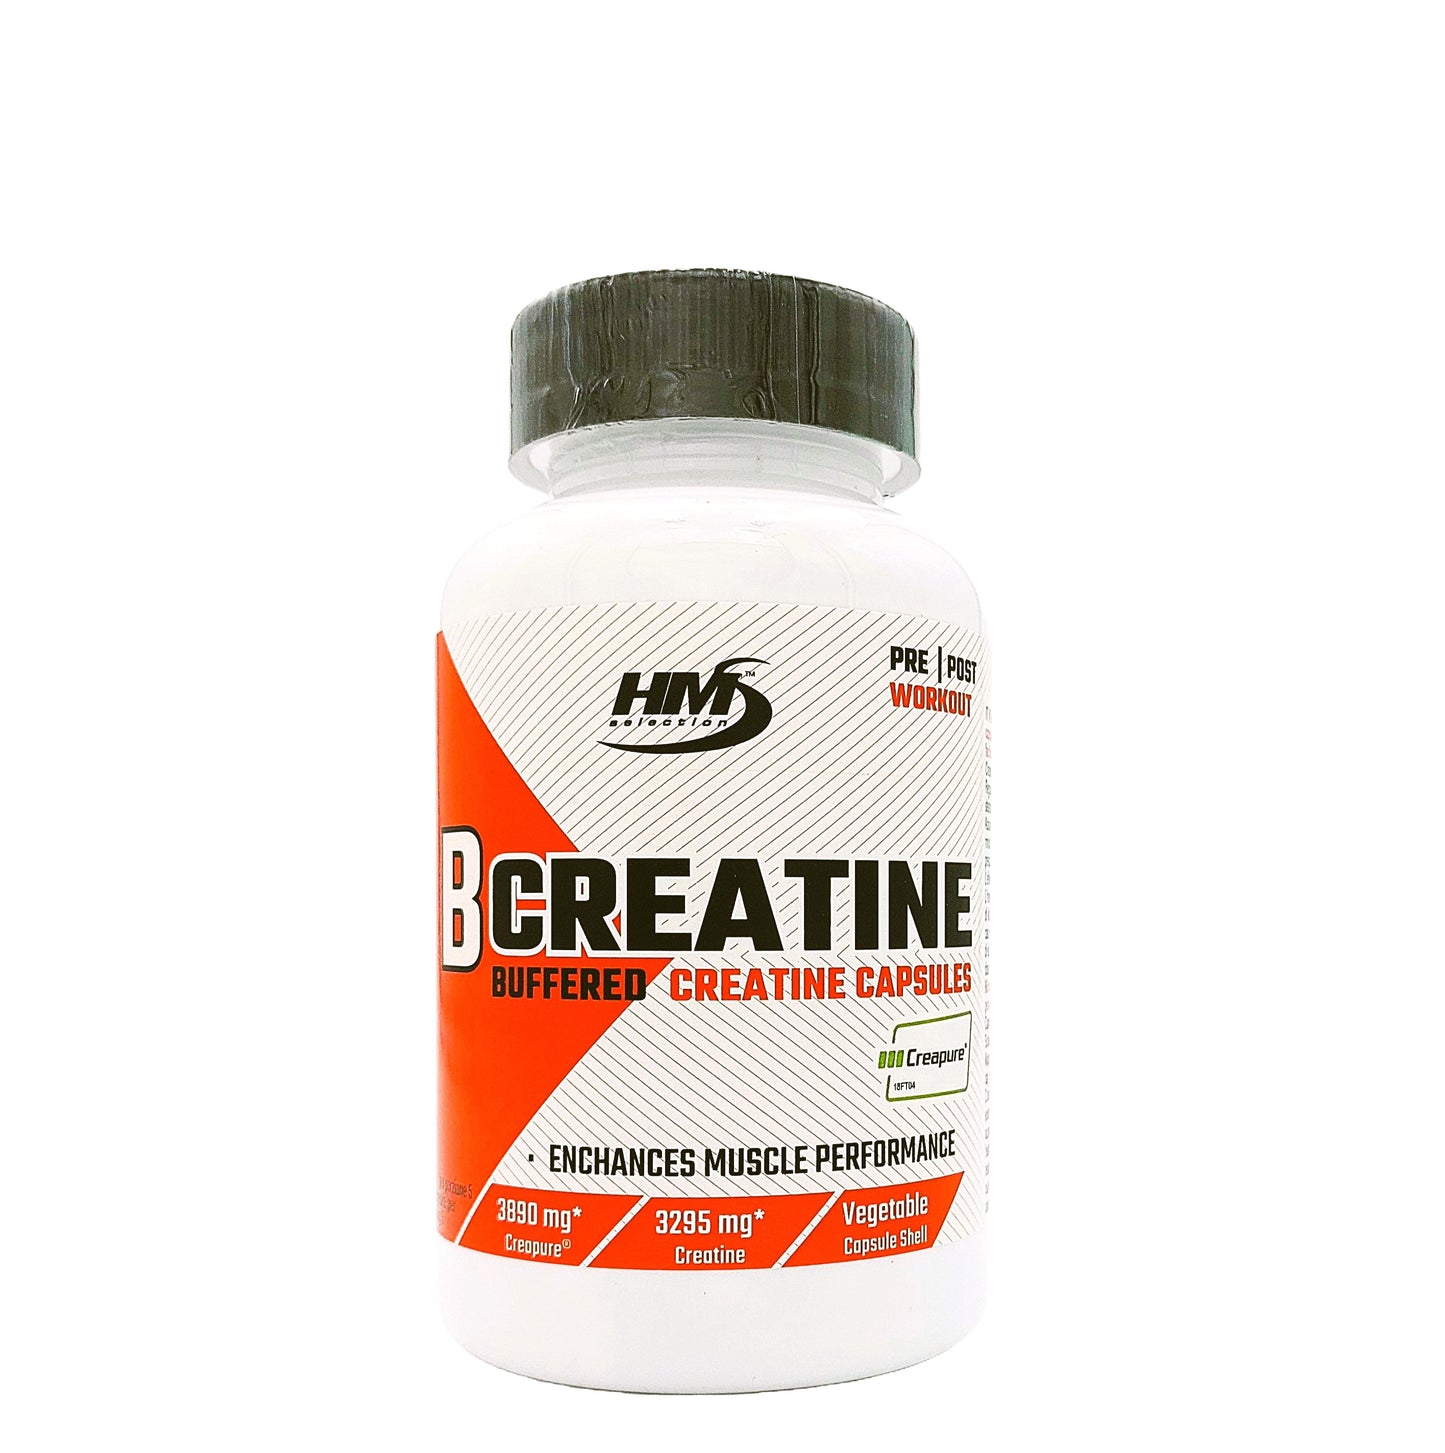 B CREATINE, 100 Kapseln - Nahrungsergänzungsmittel mit Kreatin, ideal für intensives Training